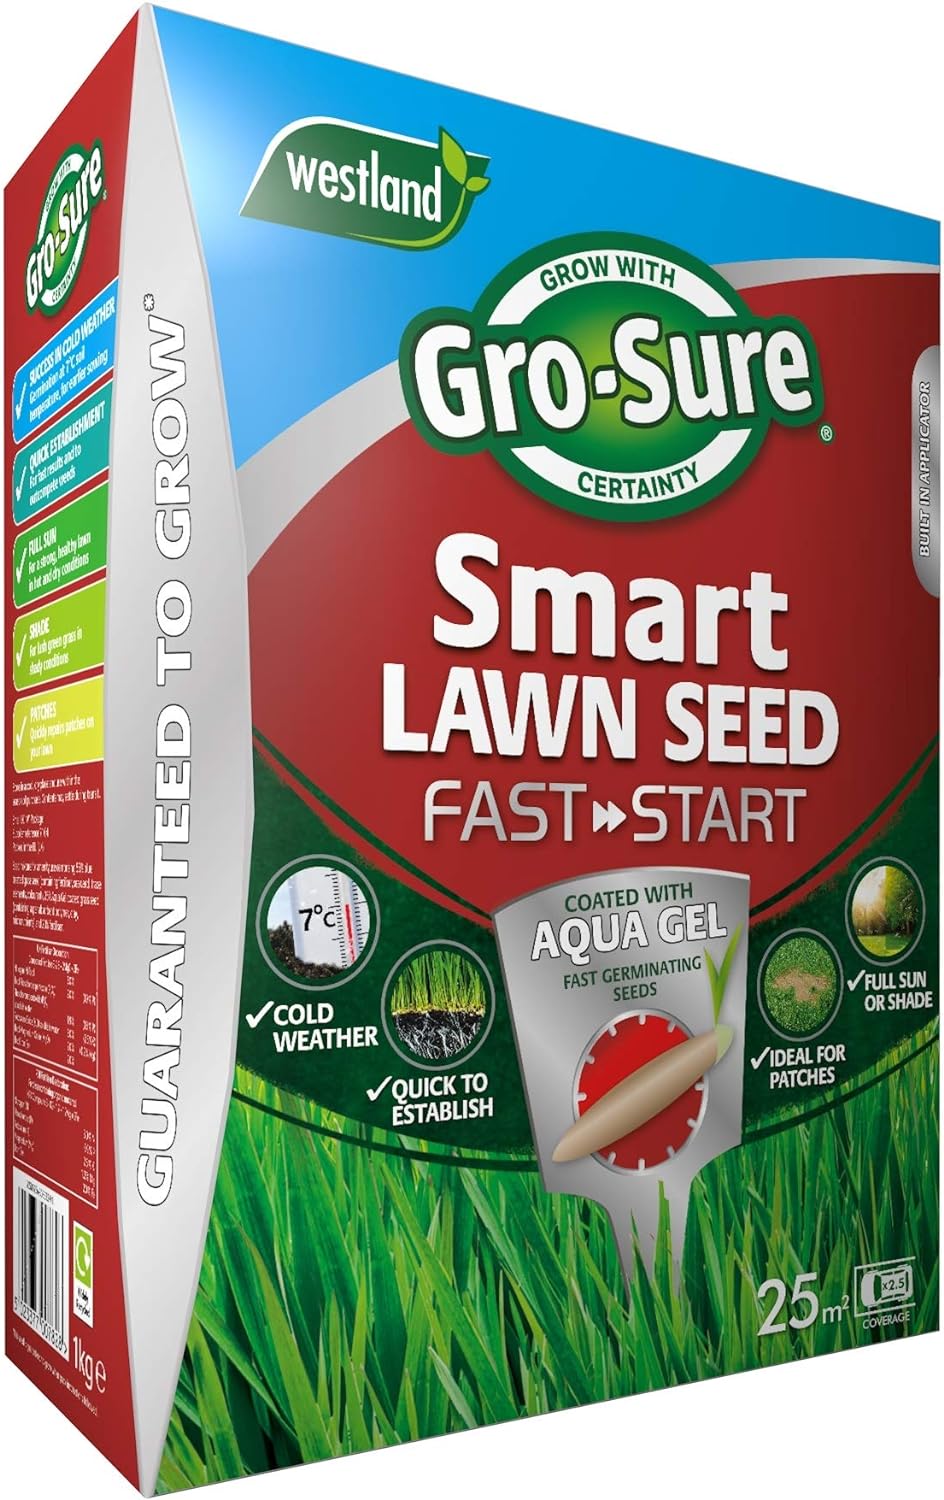 Gro-Sure 20500254 Aqua Gel Coated Fast Start Smart Grass Lawn Seed, 25 m2, 1 kg - Blue?20500254